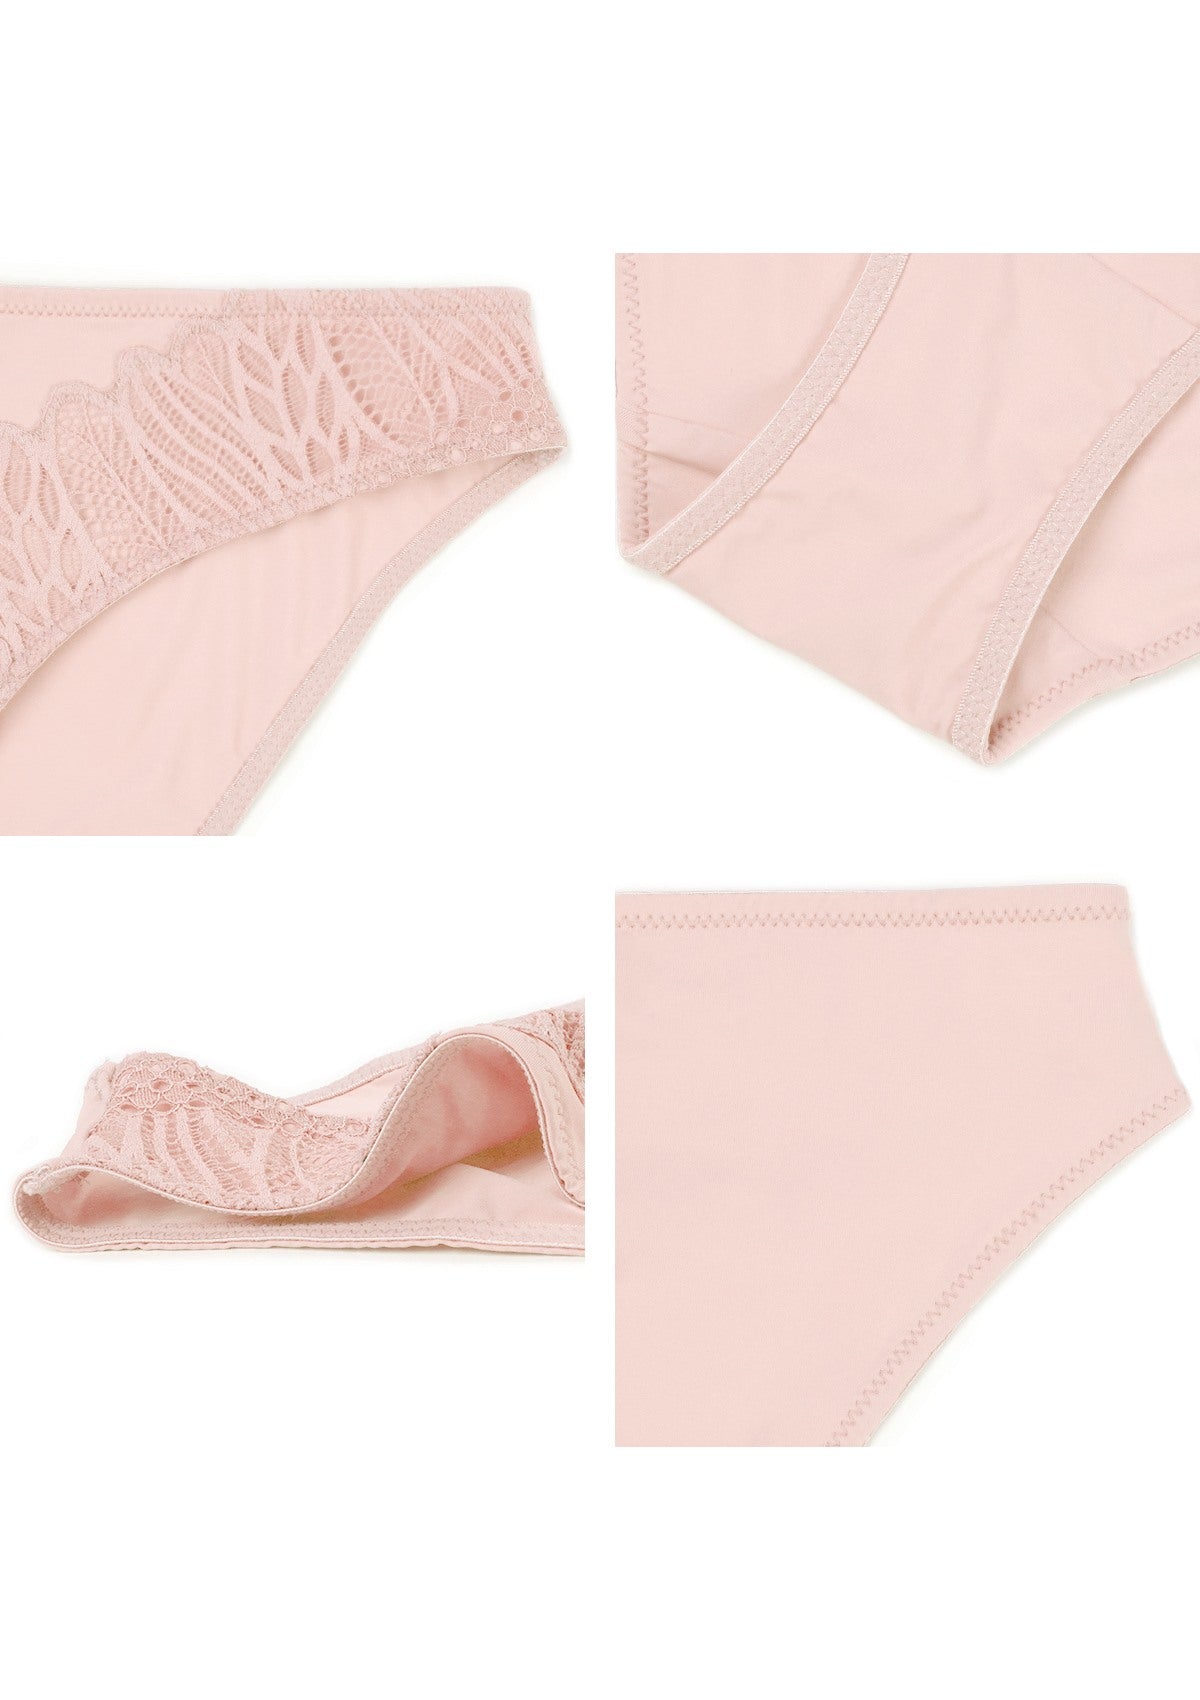 HSIA Pretty Secrets Cozy Stylish Lace Trim Feminine Modern Underwear - L / Light Pink